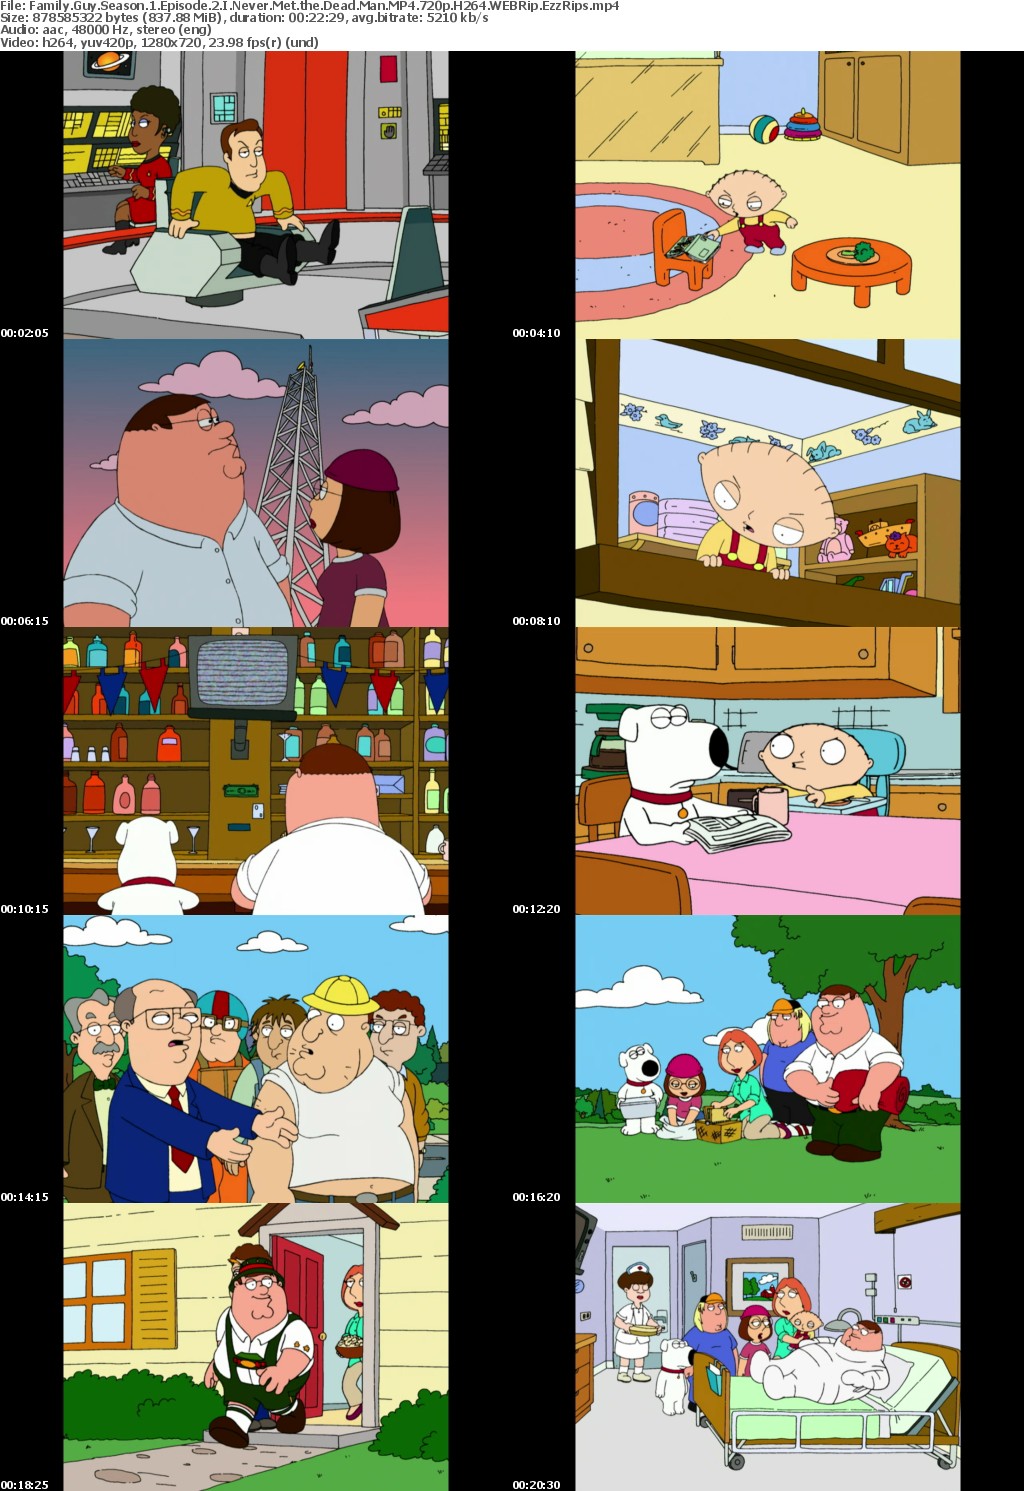 Family Guy Season 1 Episode 2 I Never Met the Dead Man MP4 720p H264 WEBRip EzzRips